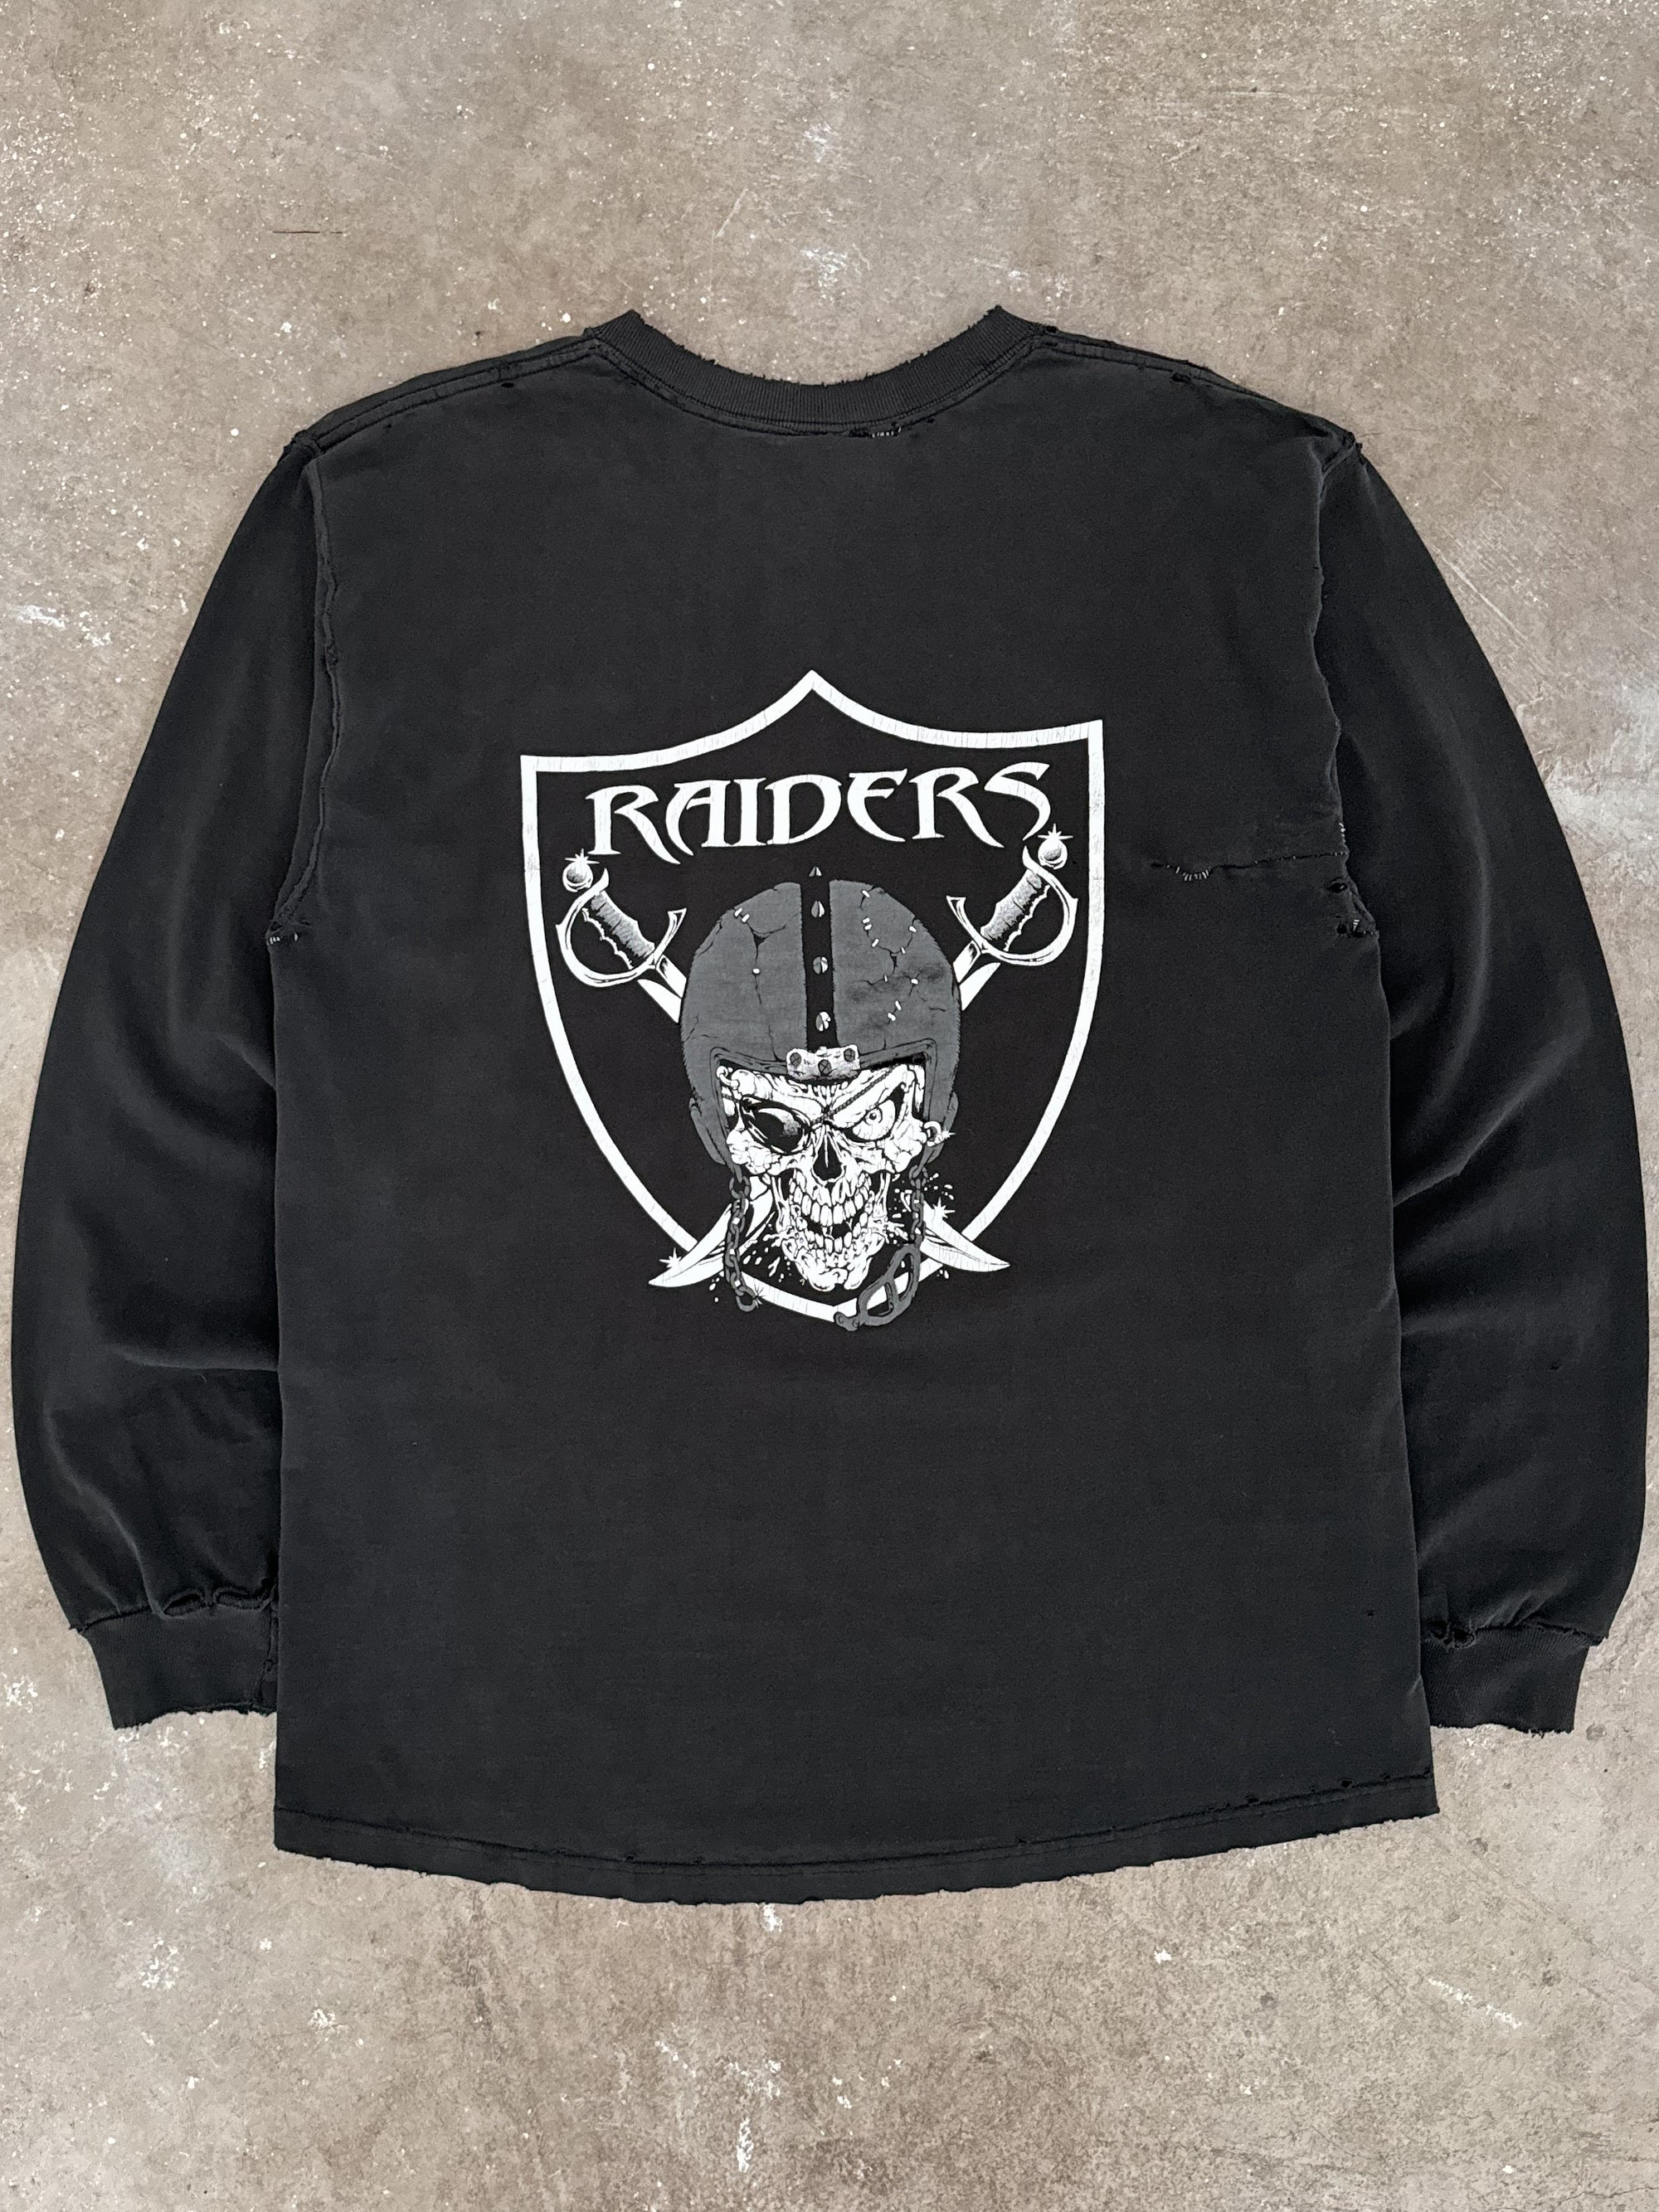 1990s "Raiders" Distressed Repaired Long Sleeve Tee (L)